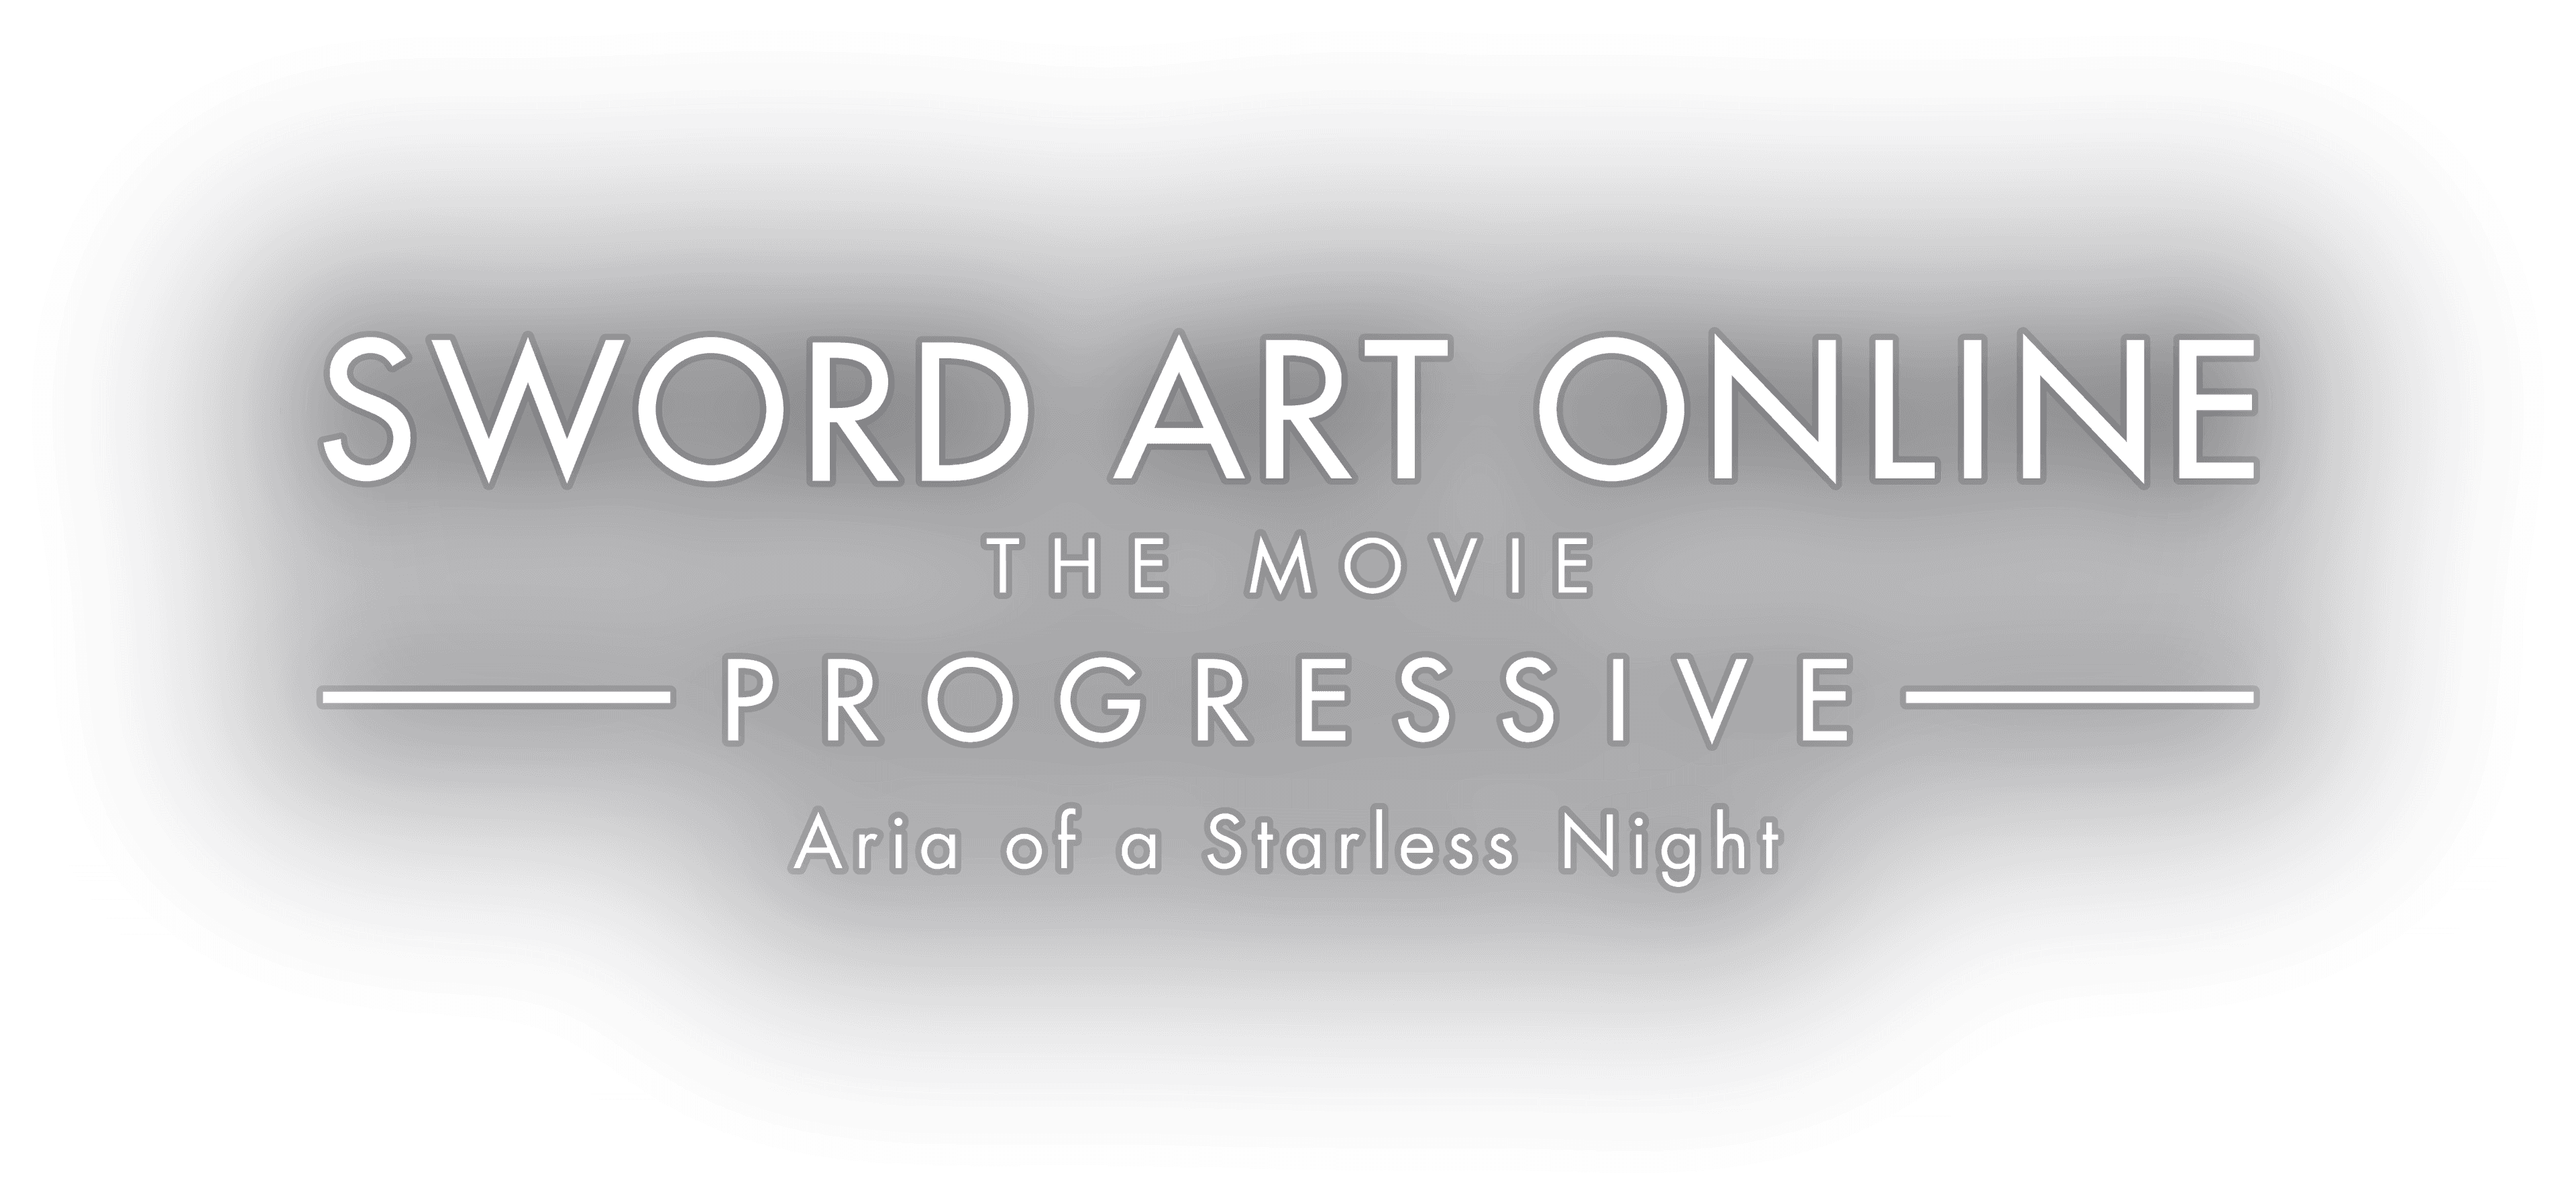 Sword Art Online the Movie – Progressive – Aria of a Starless Night logo